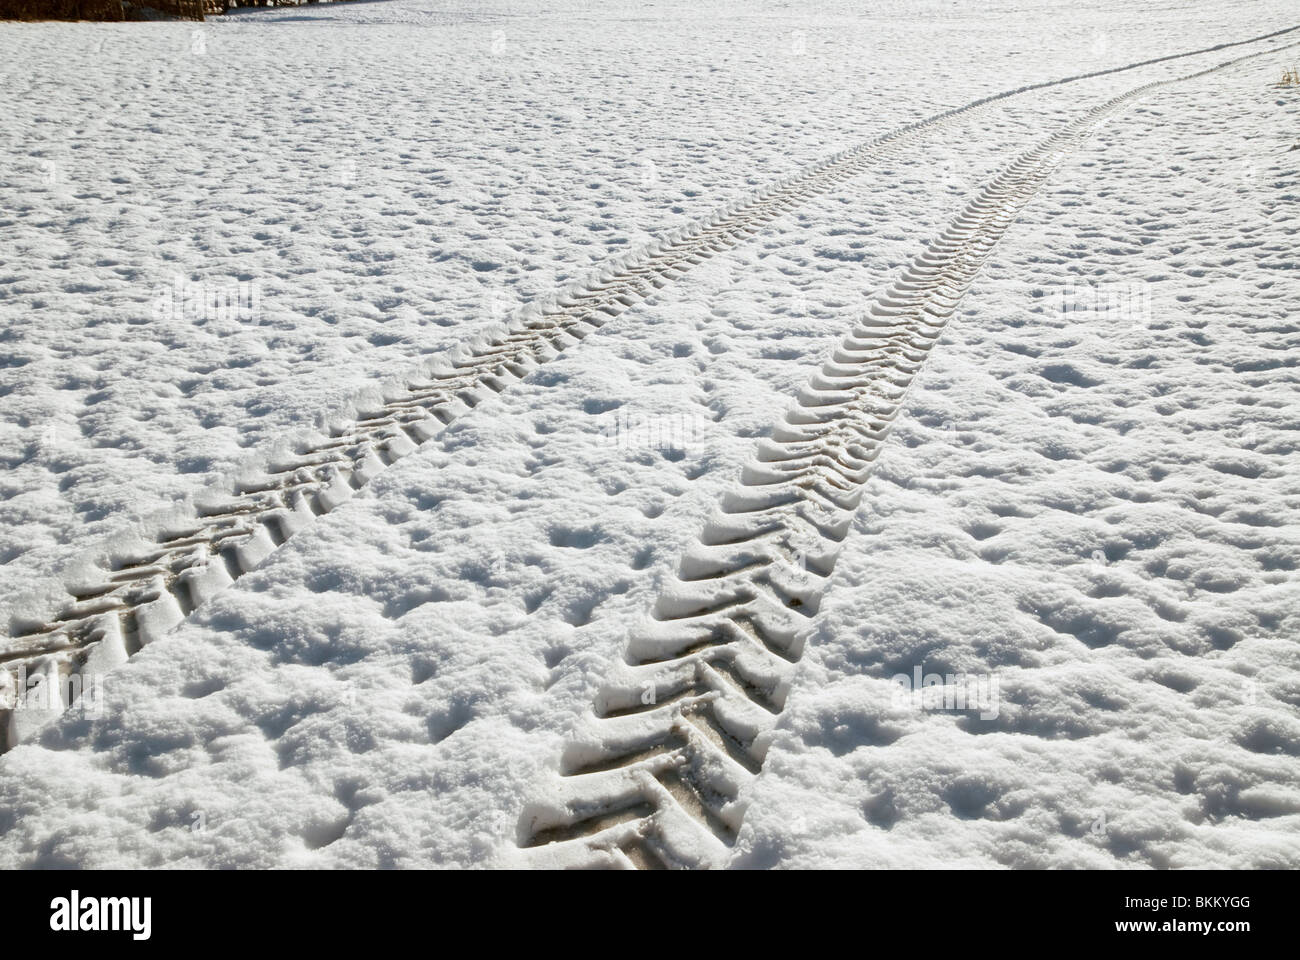 Tractor tyre tracks across a snowy field in Wales Stock Photo